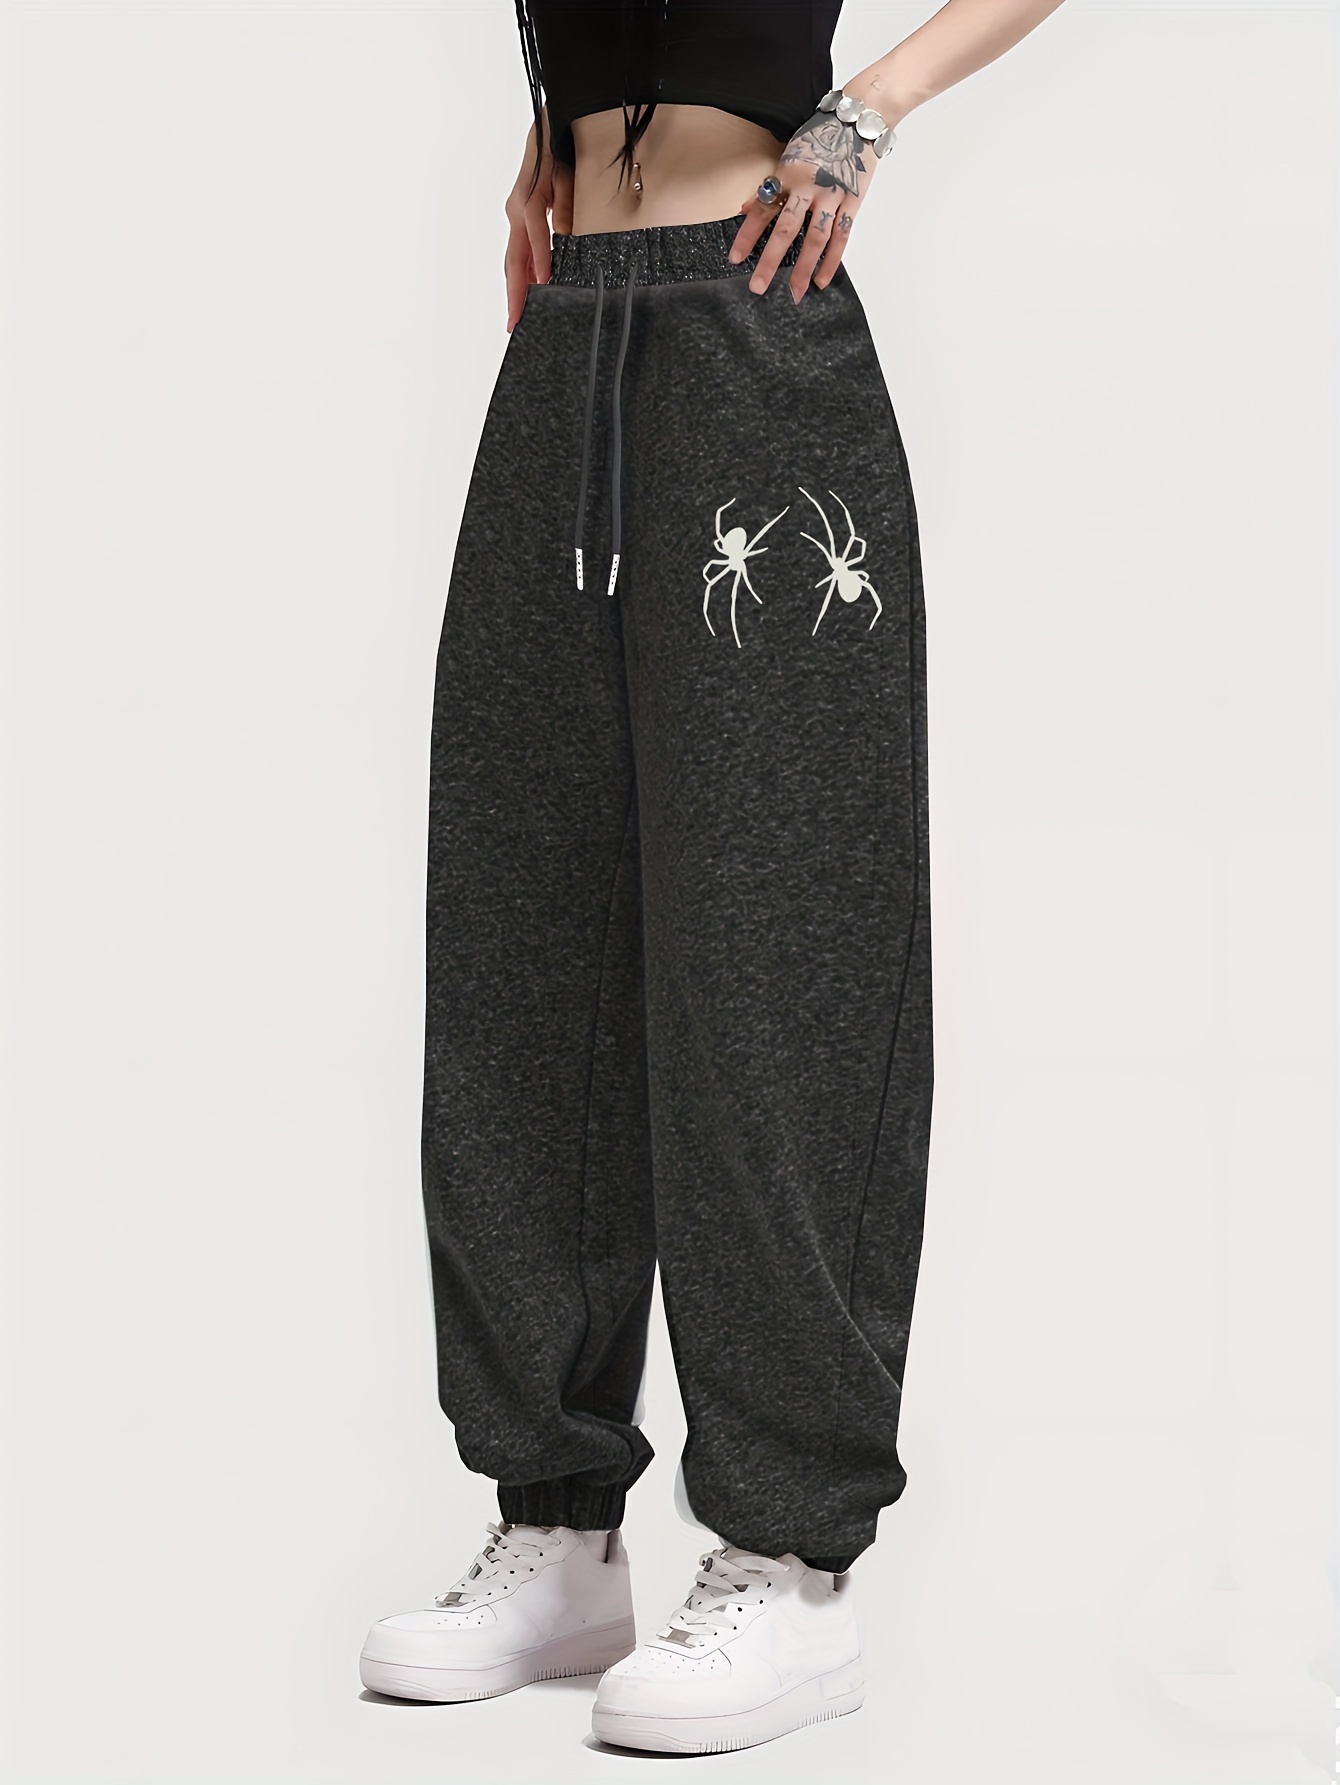 Wangsaura Women's Loose Sweatpants Elastic Waist Drawstring Graphic Print  Pants